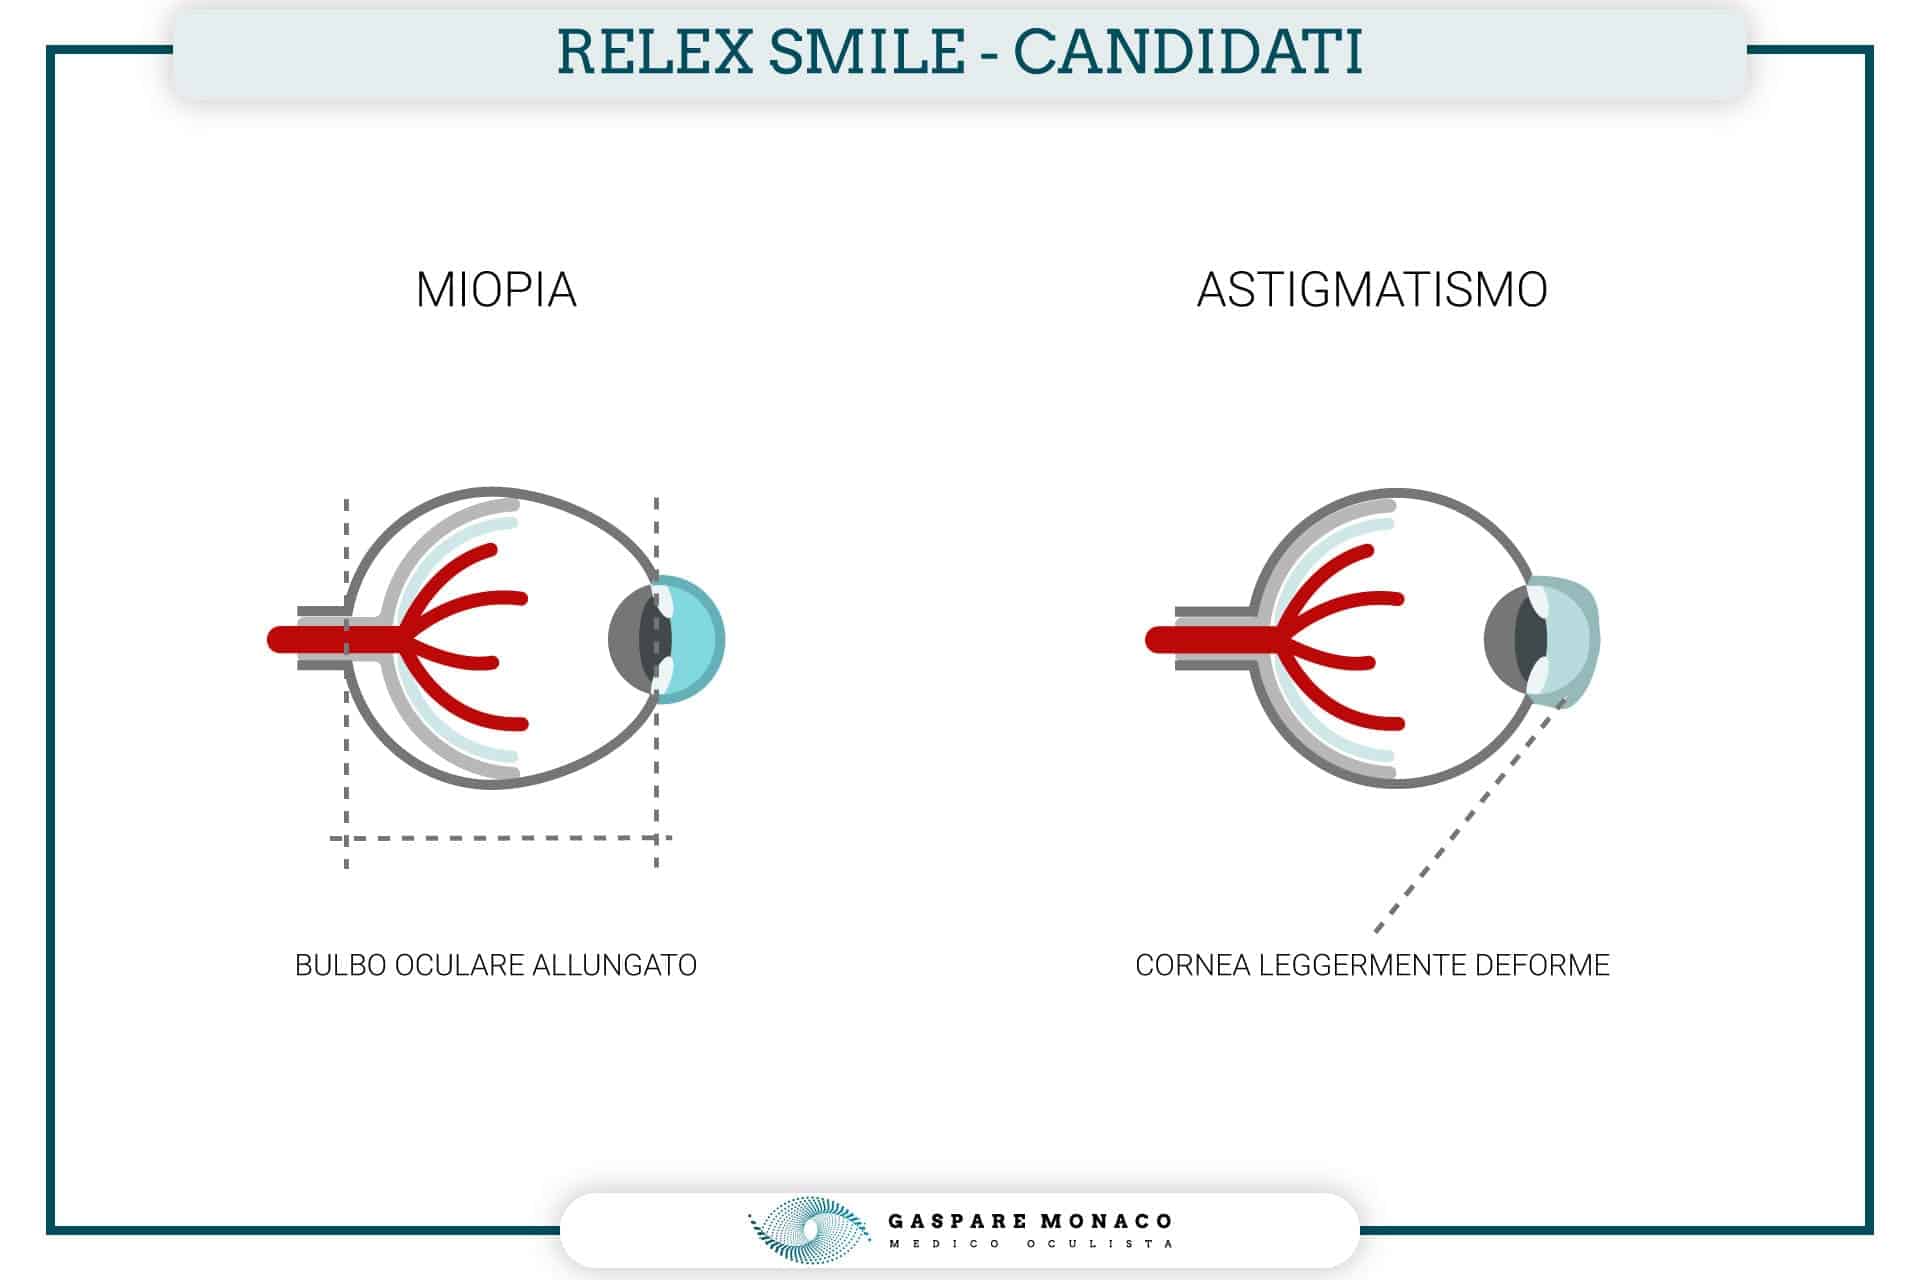 Relex smile clinicaspectr ru. Релекс Смайл. Lasic smile лазер. Протокол работы лазера smile. Смайл лазер когда появился метод.